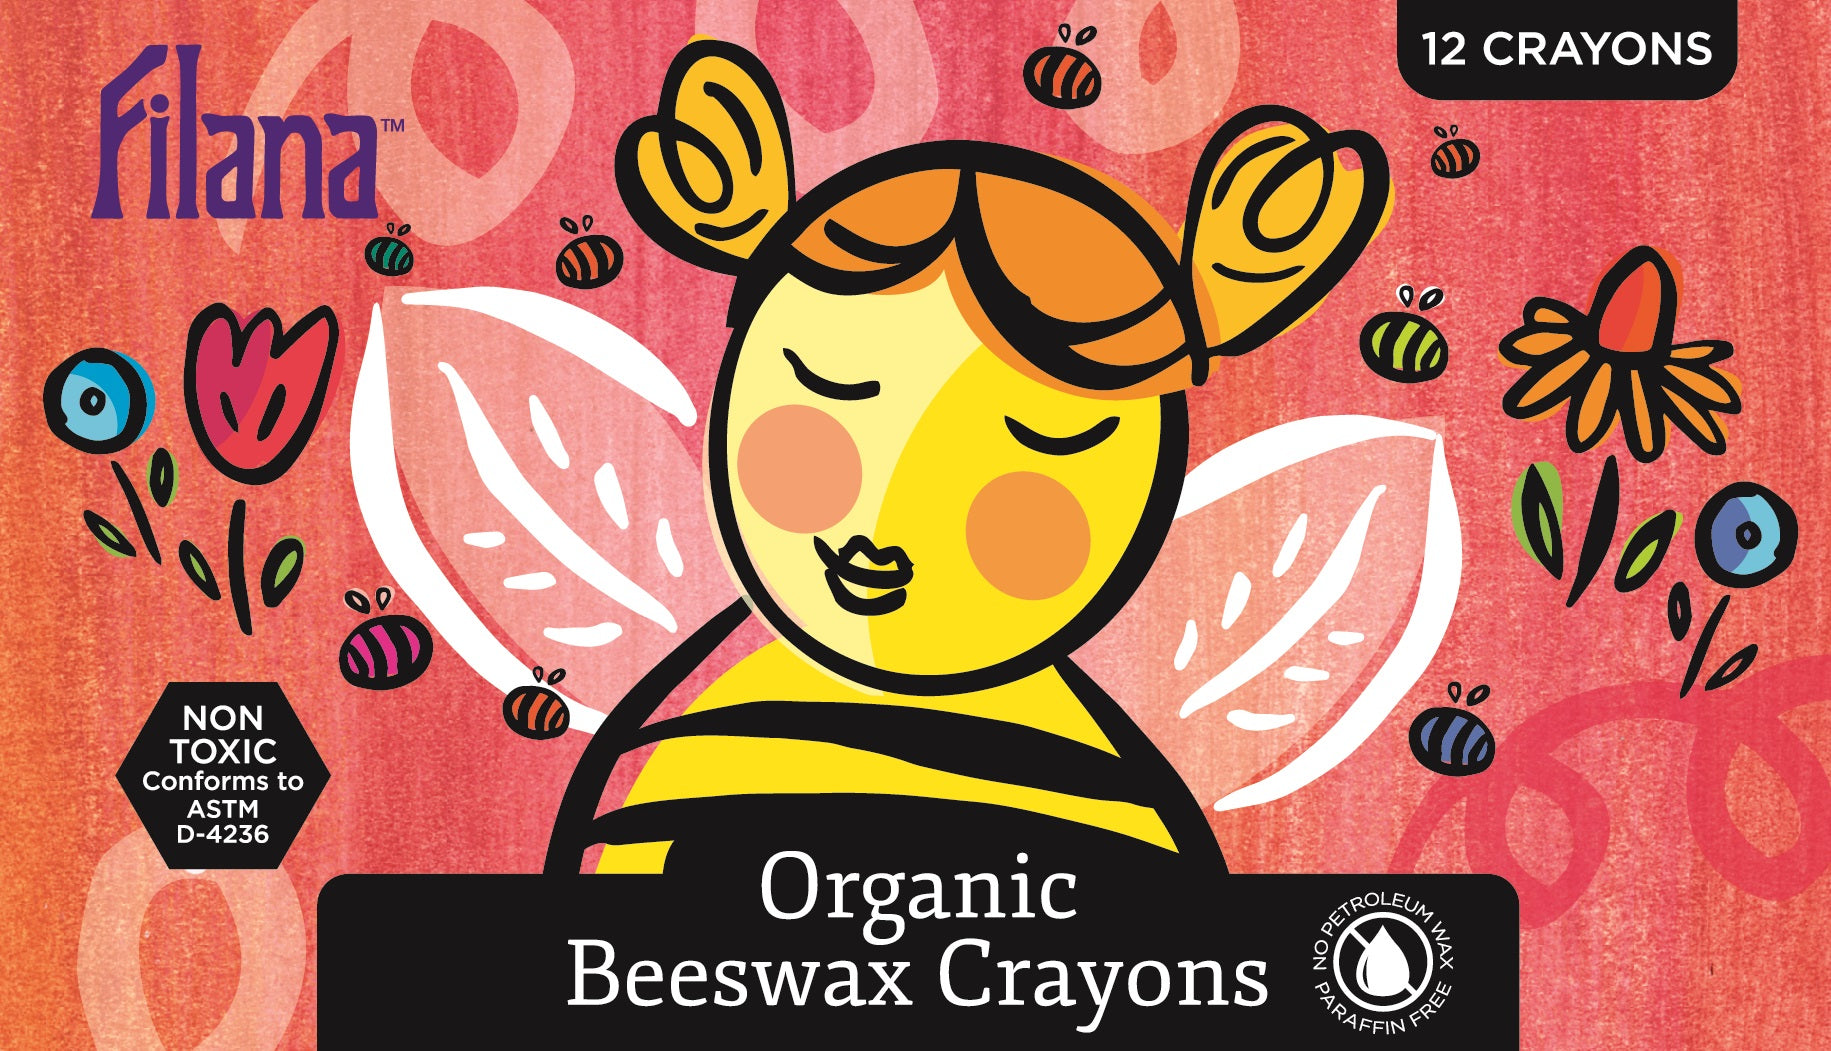 Filana Organic Beeswax Crayons